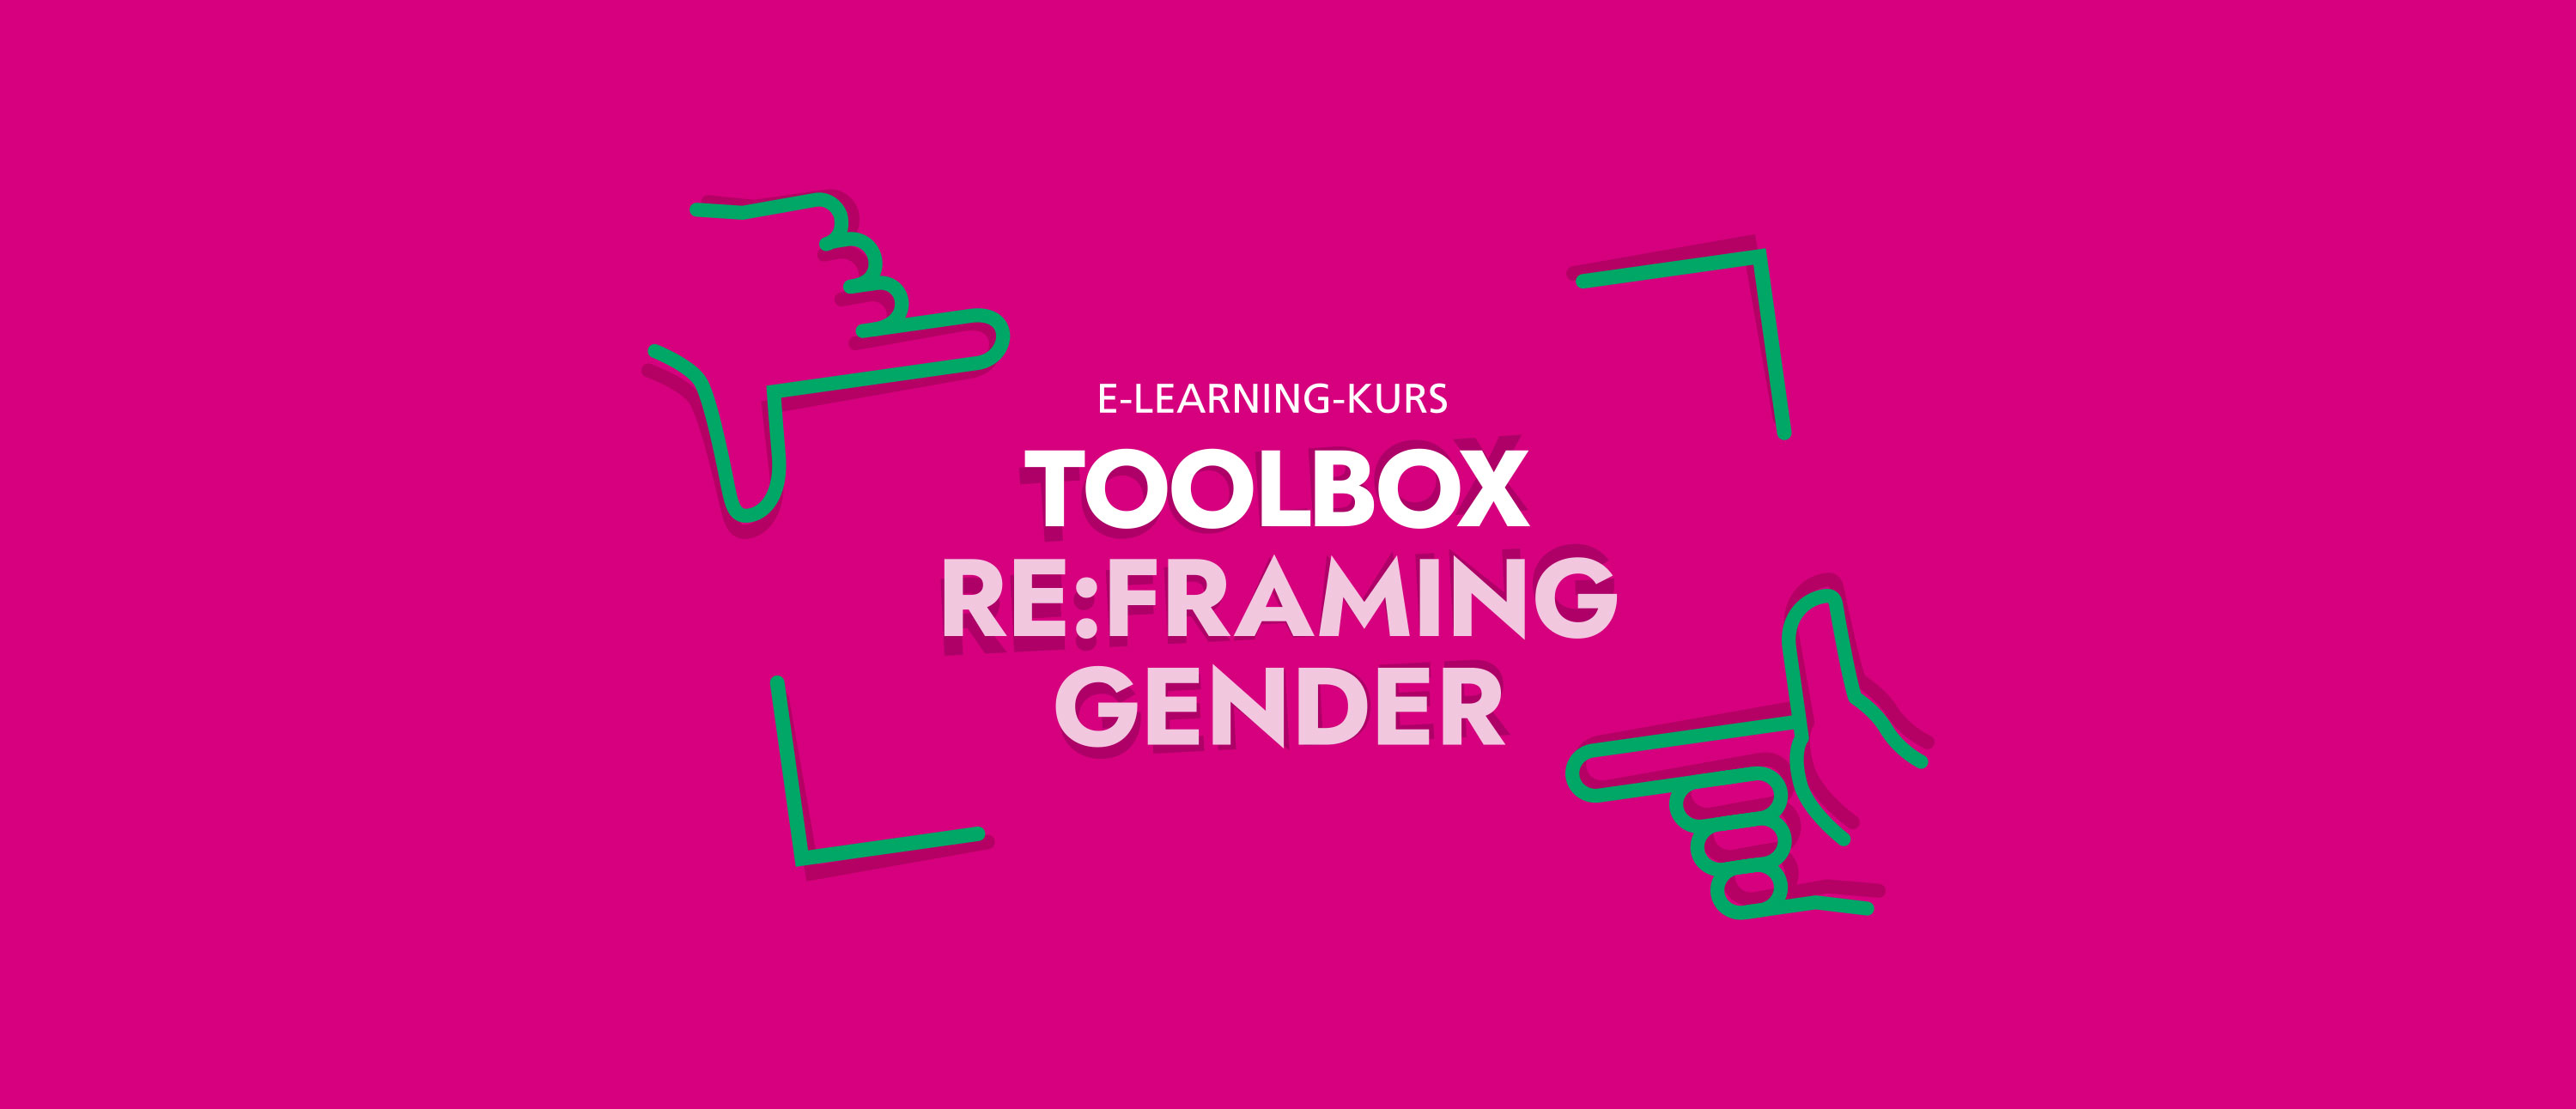 E-Learning Re:Framing Gender Toolbox